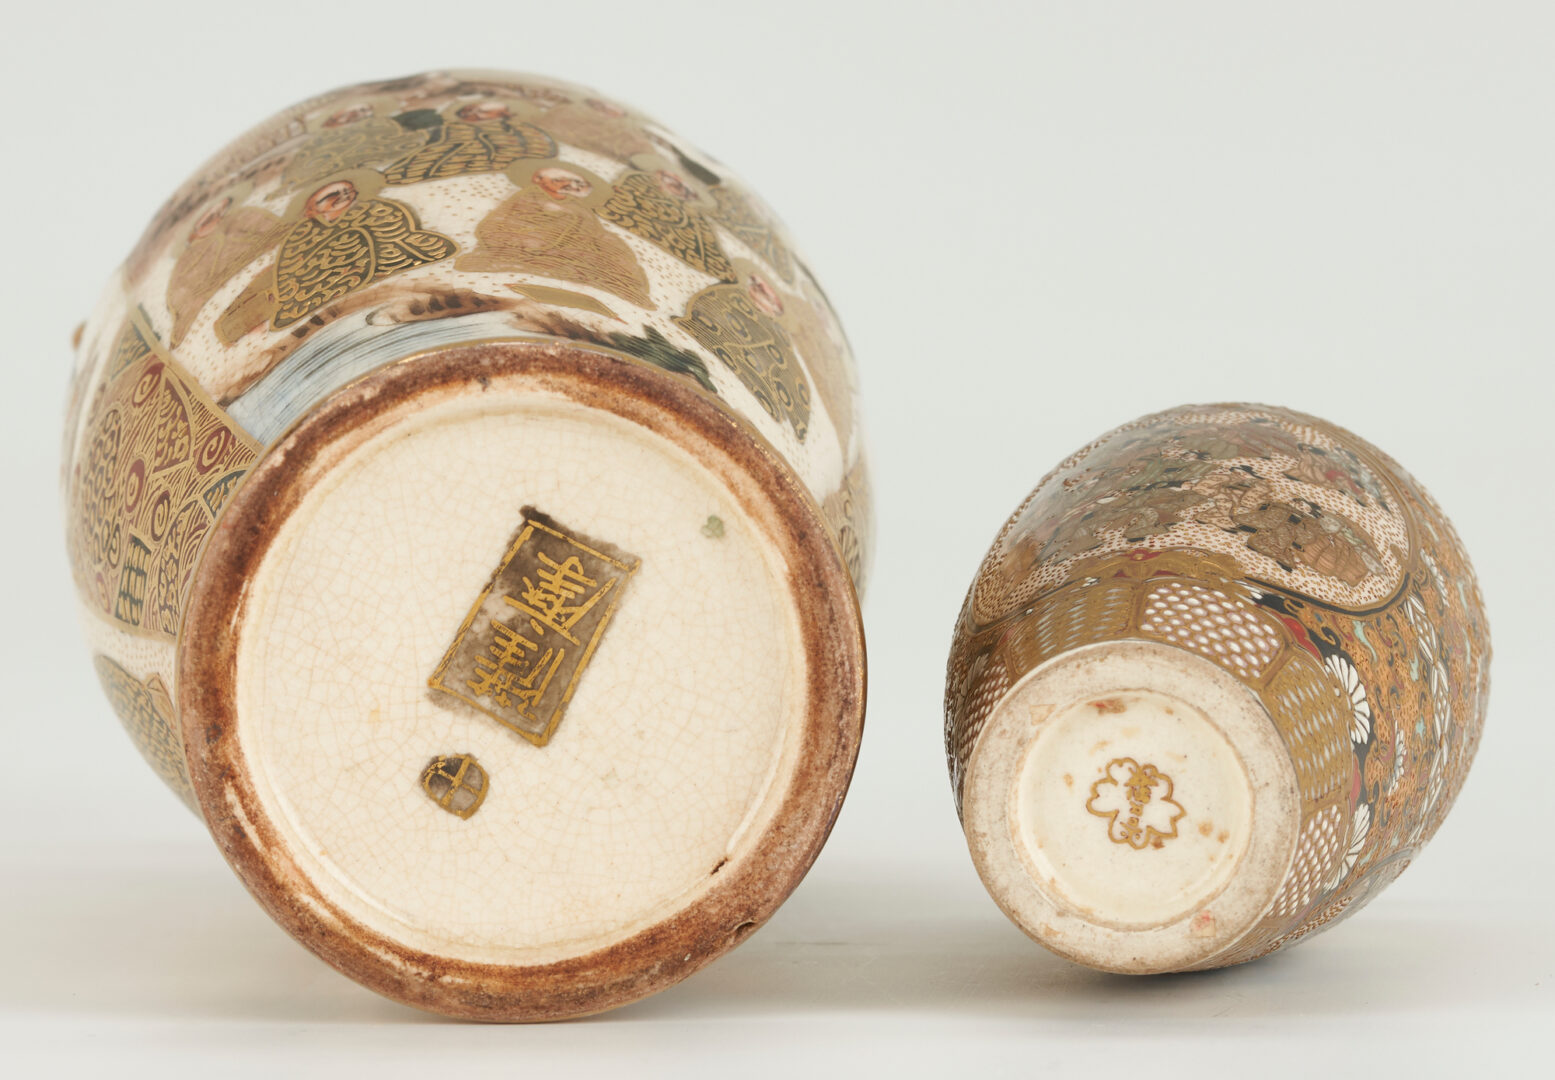 Lot 277: 4 Japanese Meiji Period Satsuma Vases, incl. Miniatures